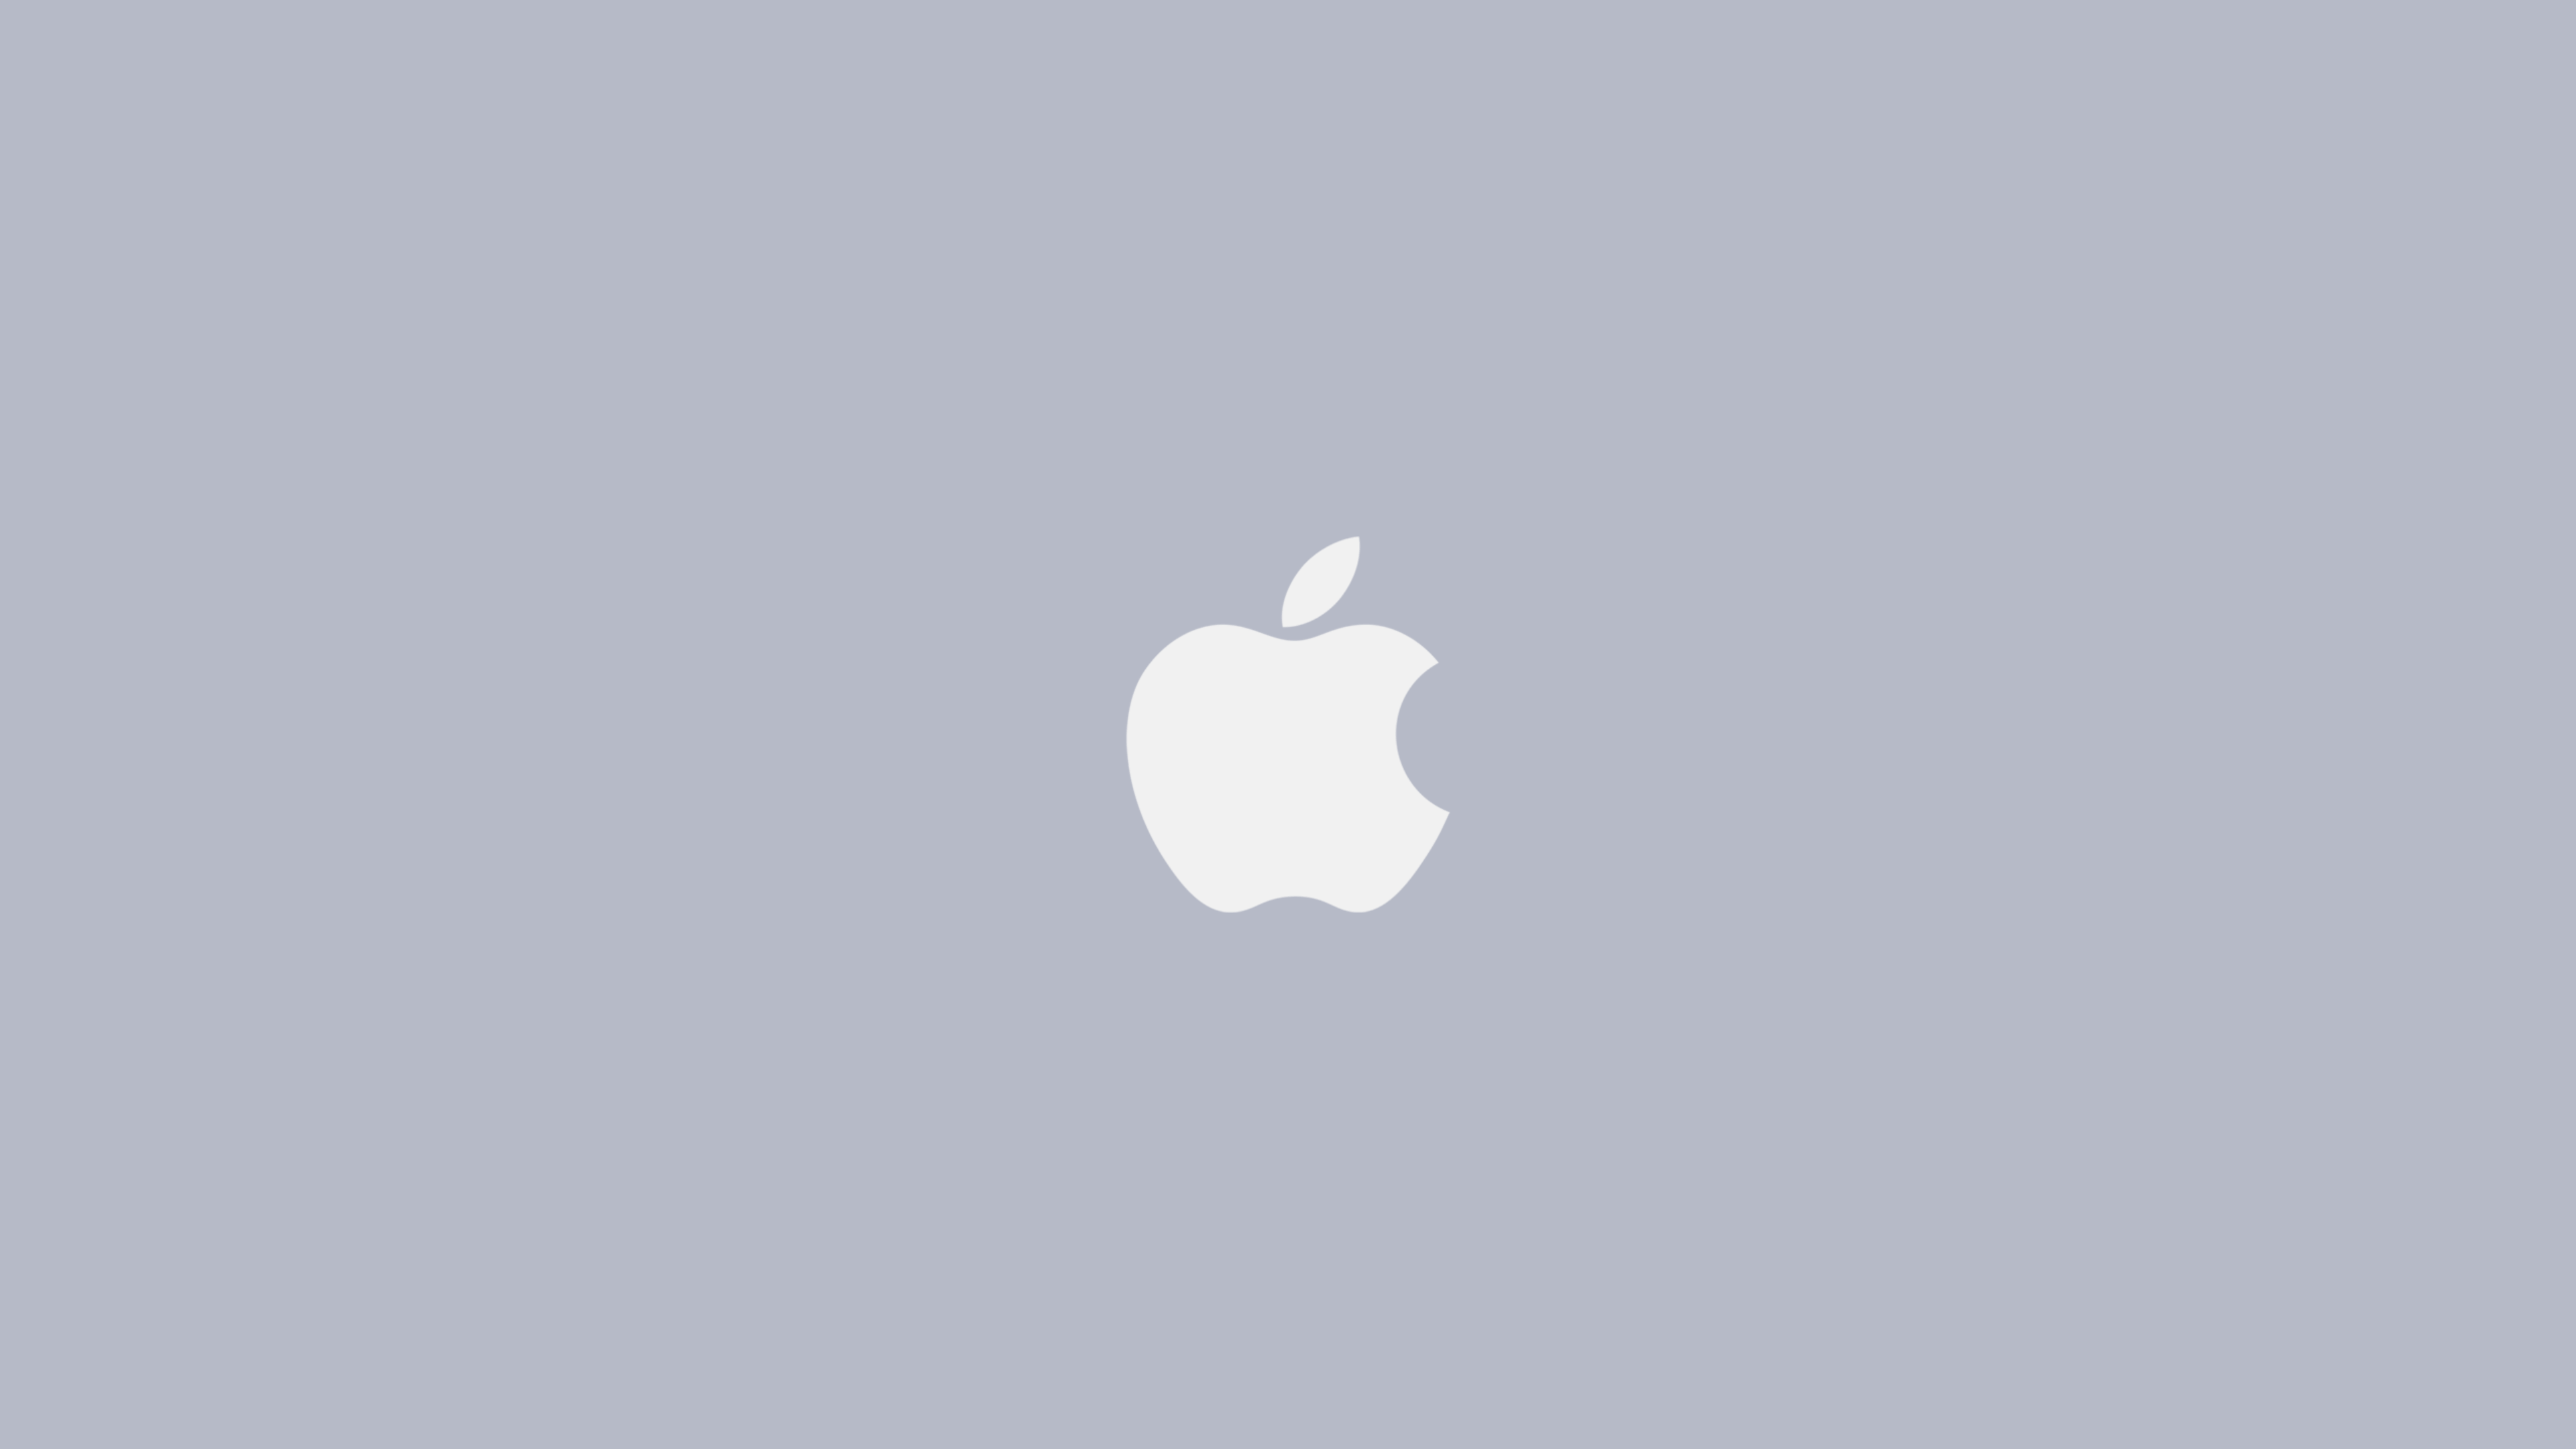 Grey and White Apple Logo 4K Wallpaper. Free 4K Wallpaper